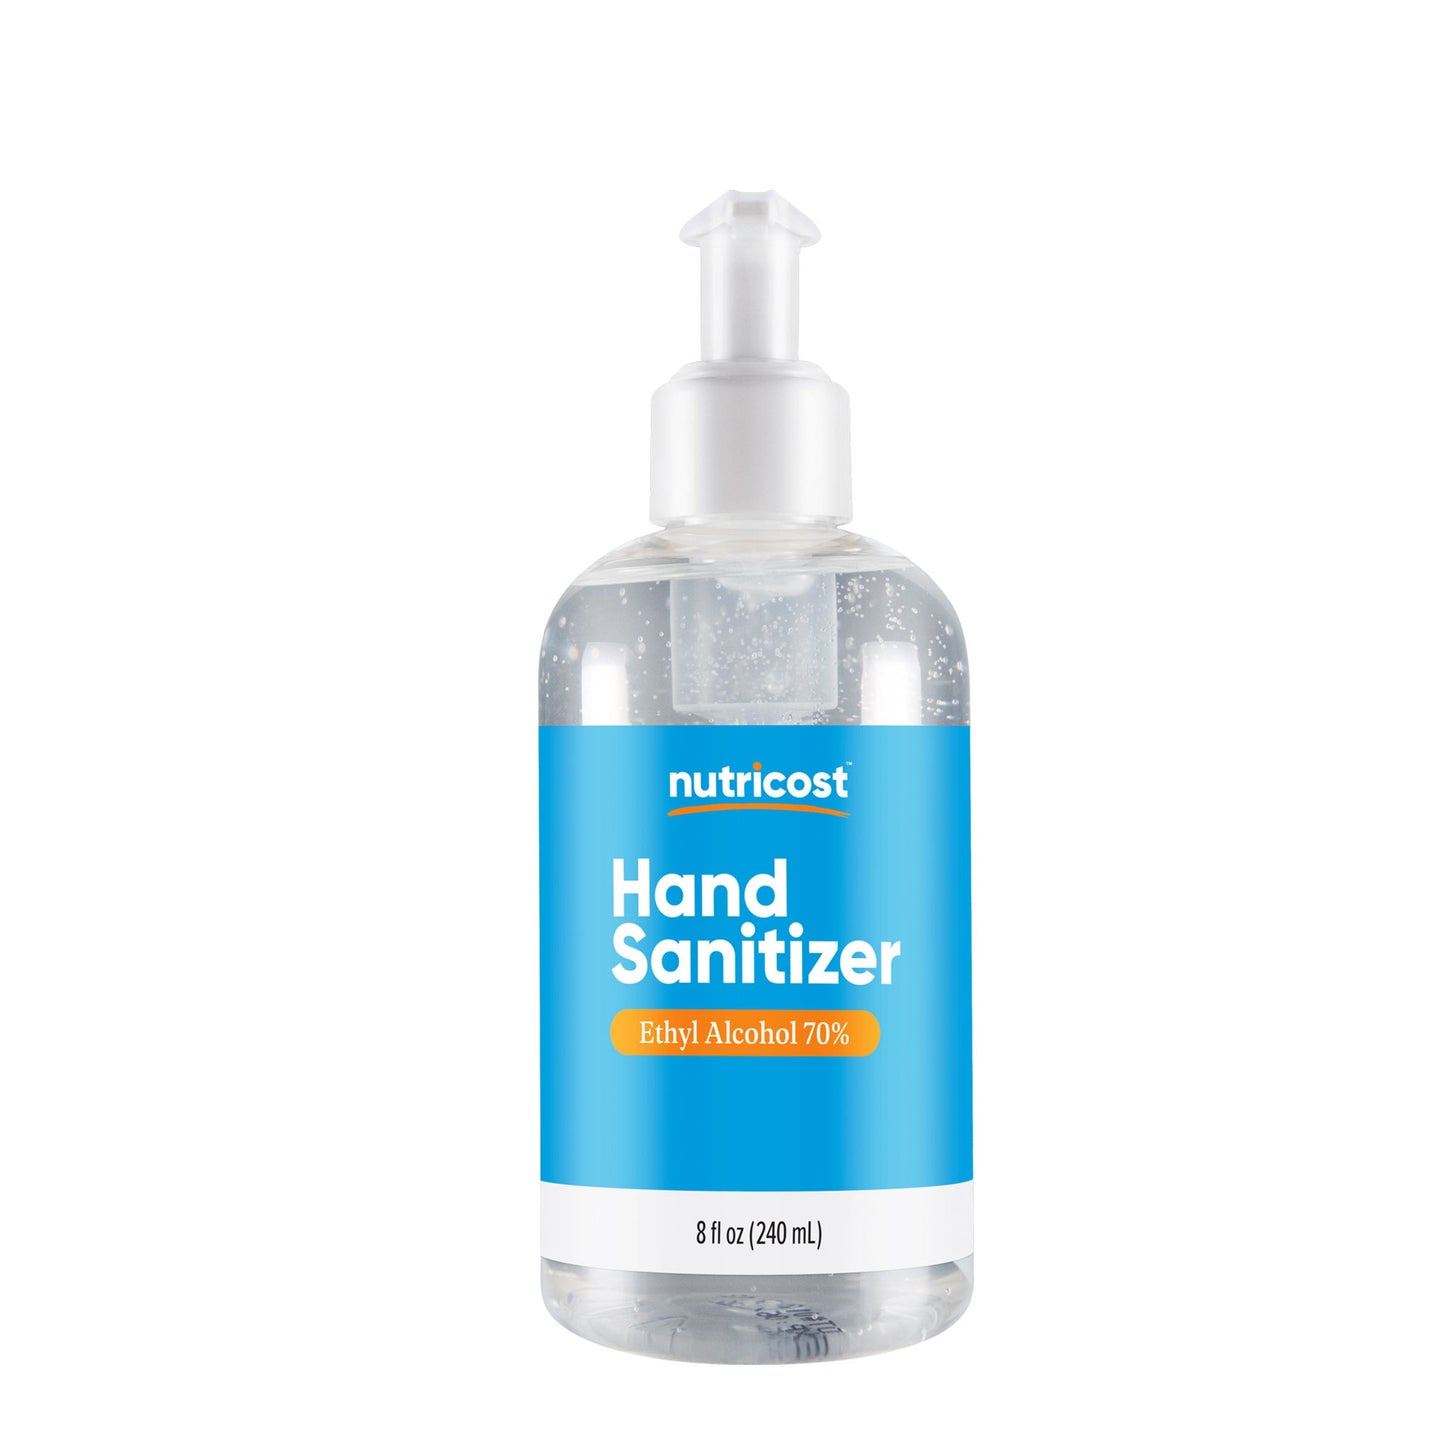 Nutricost Hand Sanitizer